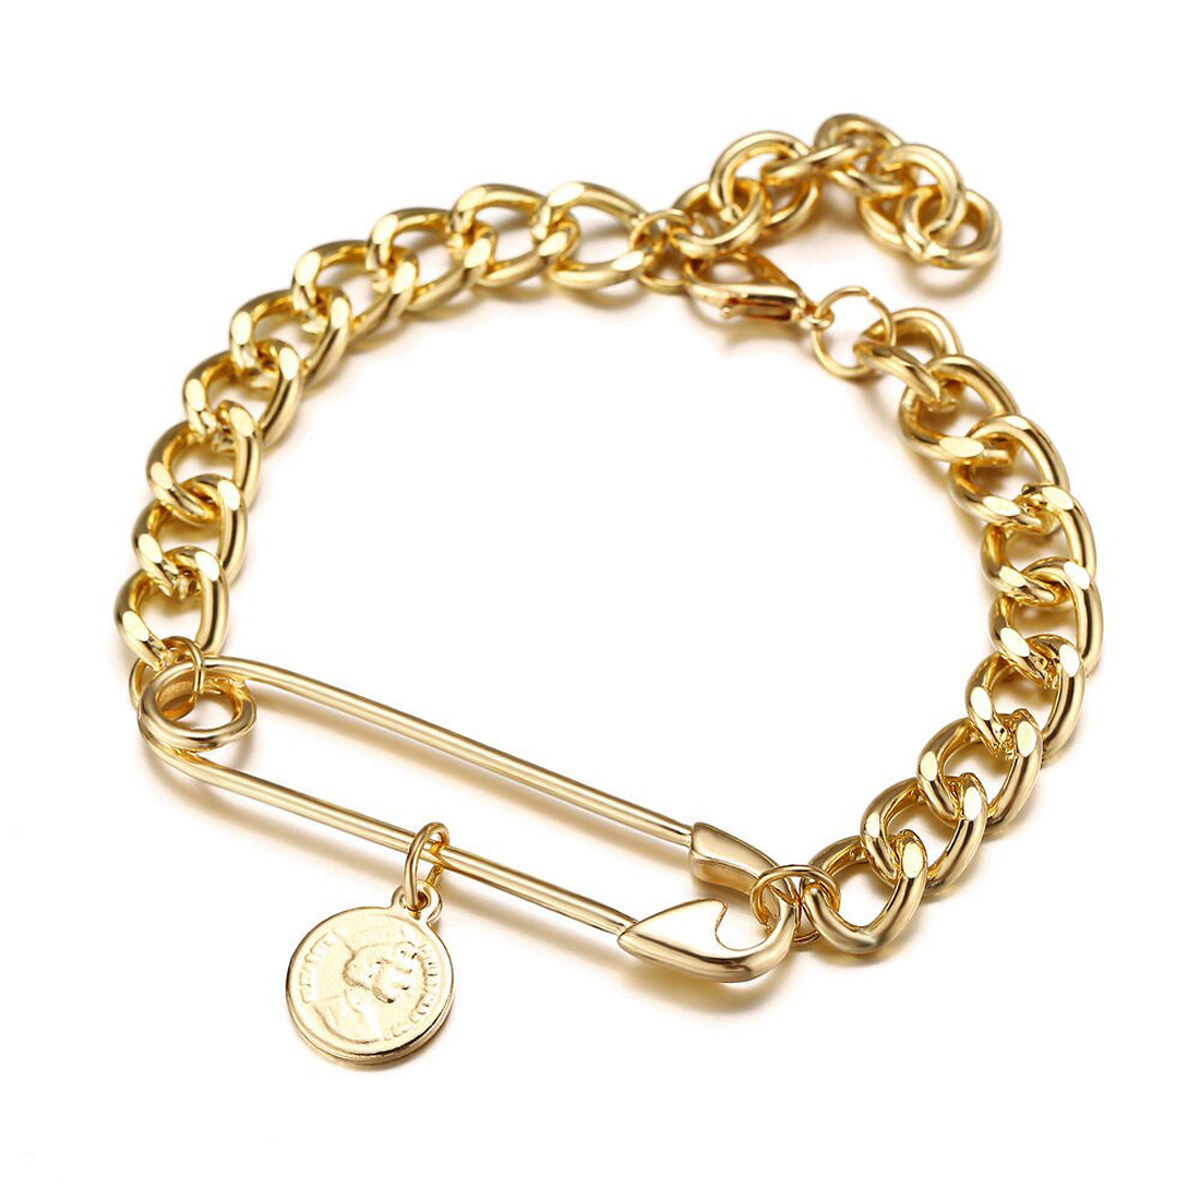 Buy Memoir Gold plated Round link Rolo chain bracelet for Men at Amazonin